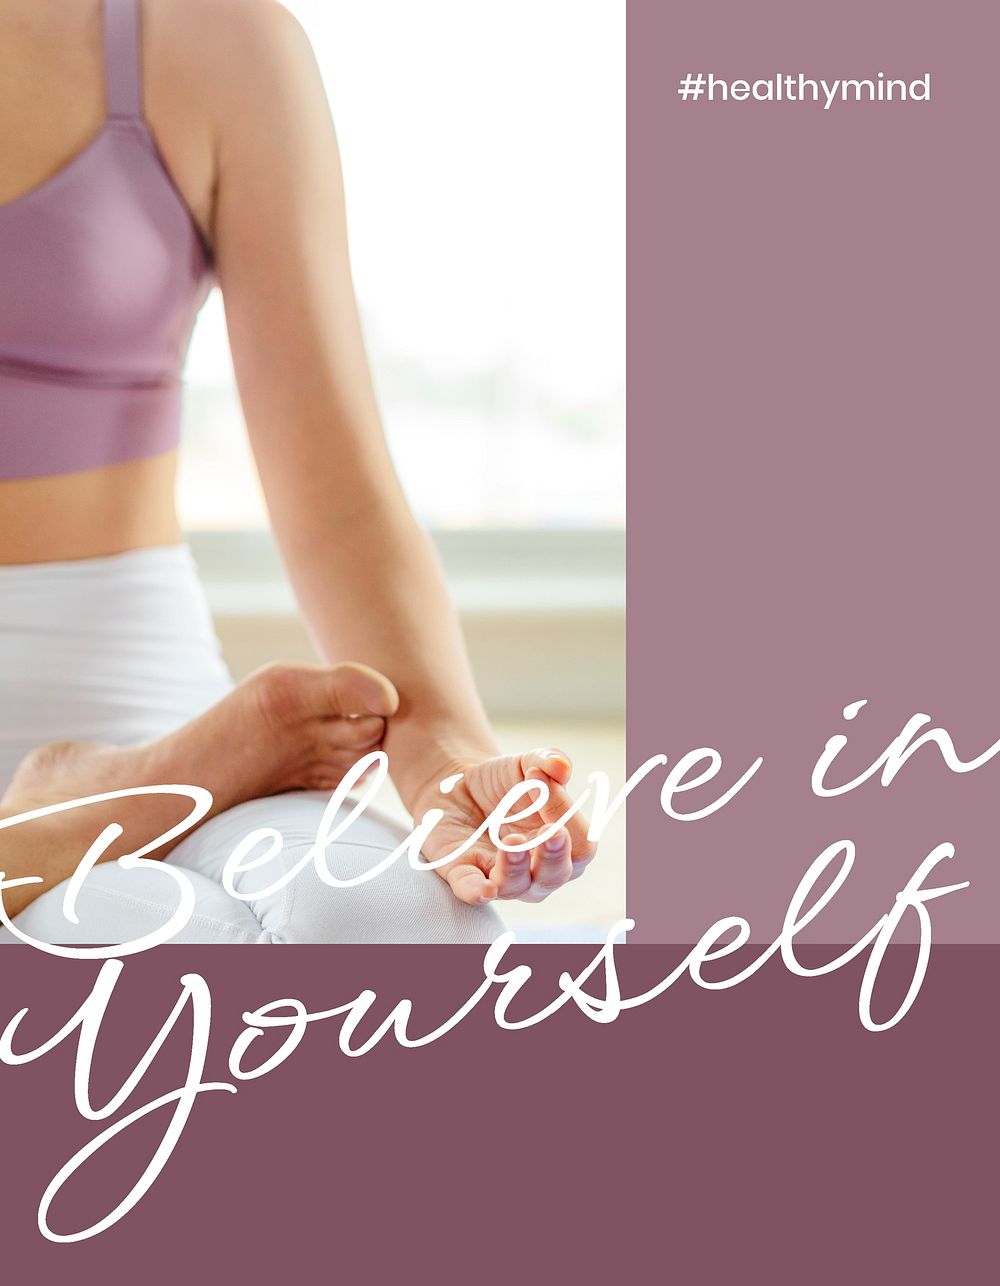 Believe in yourself flyer template, inspirational wellness quote vector